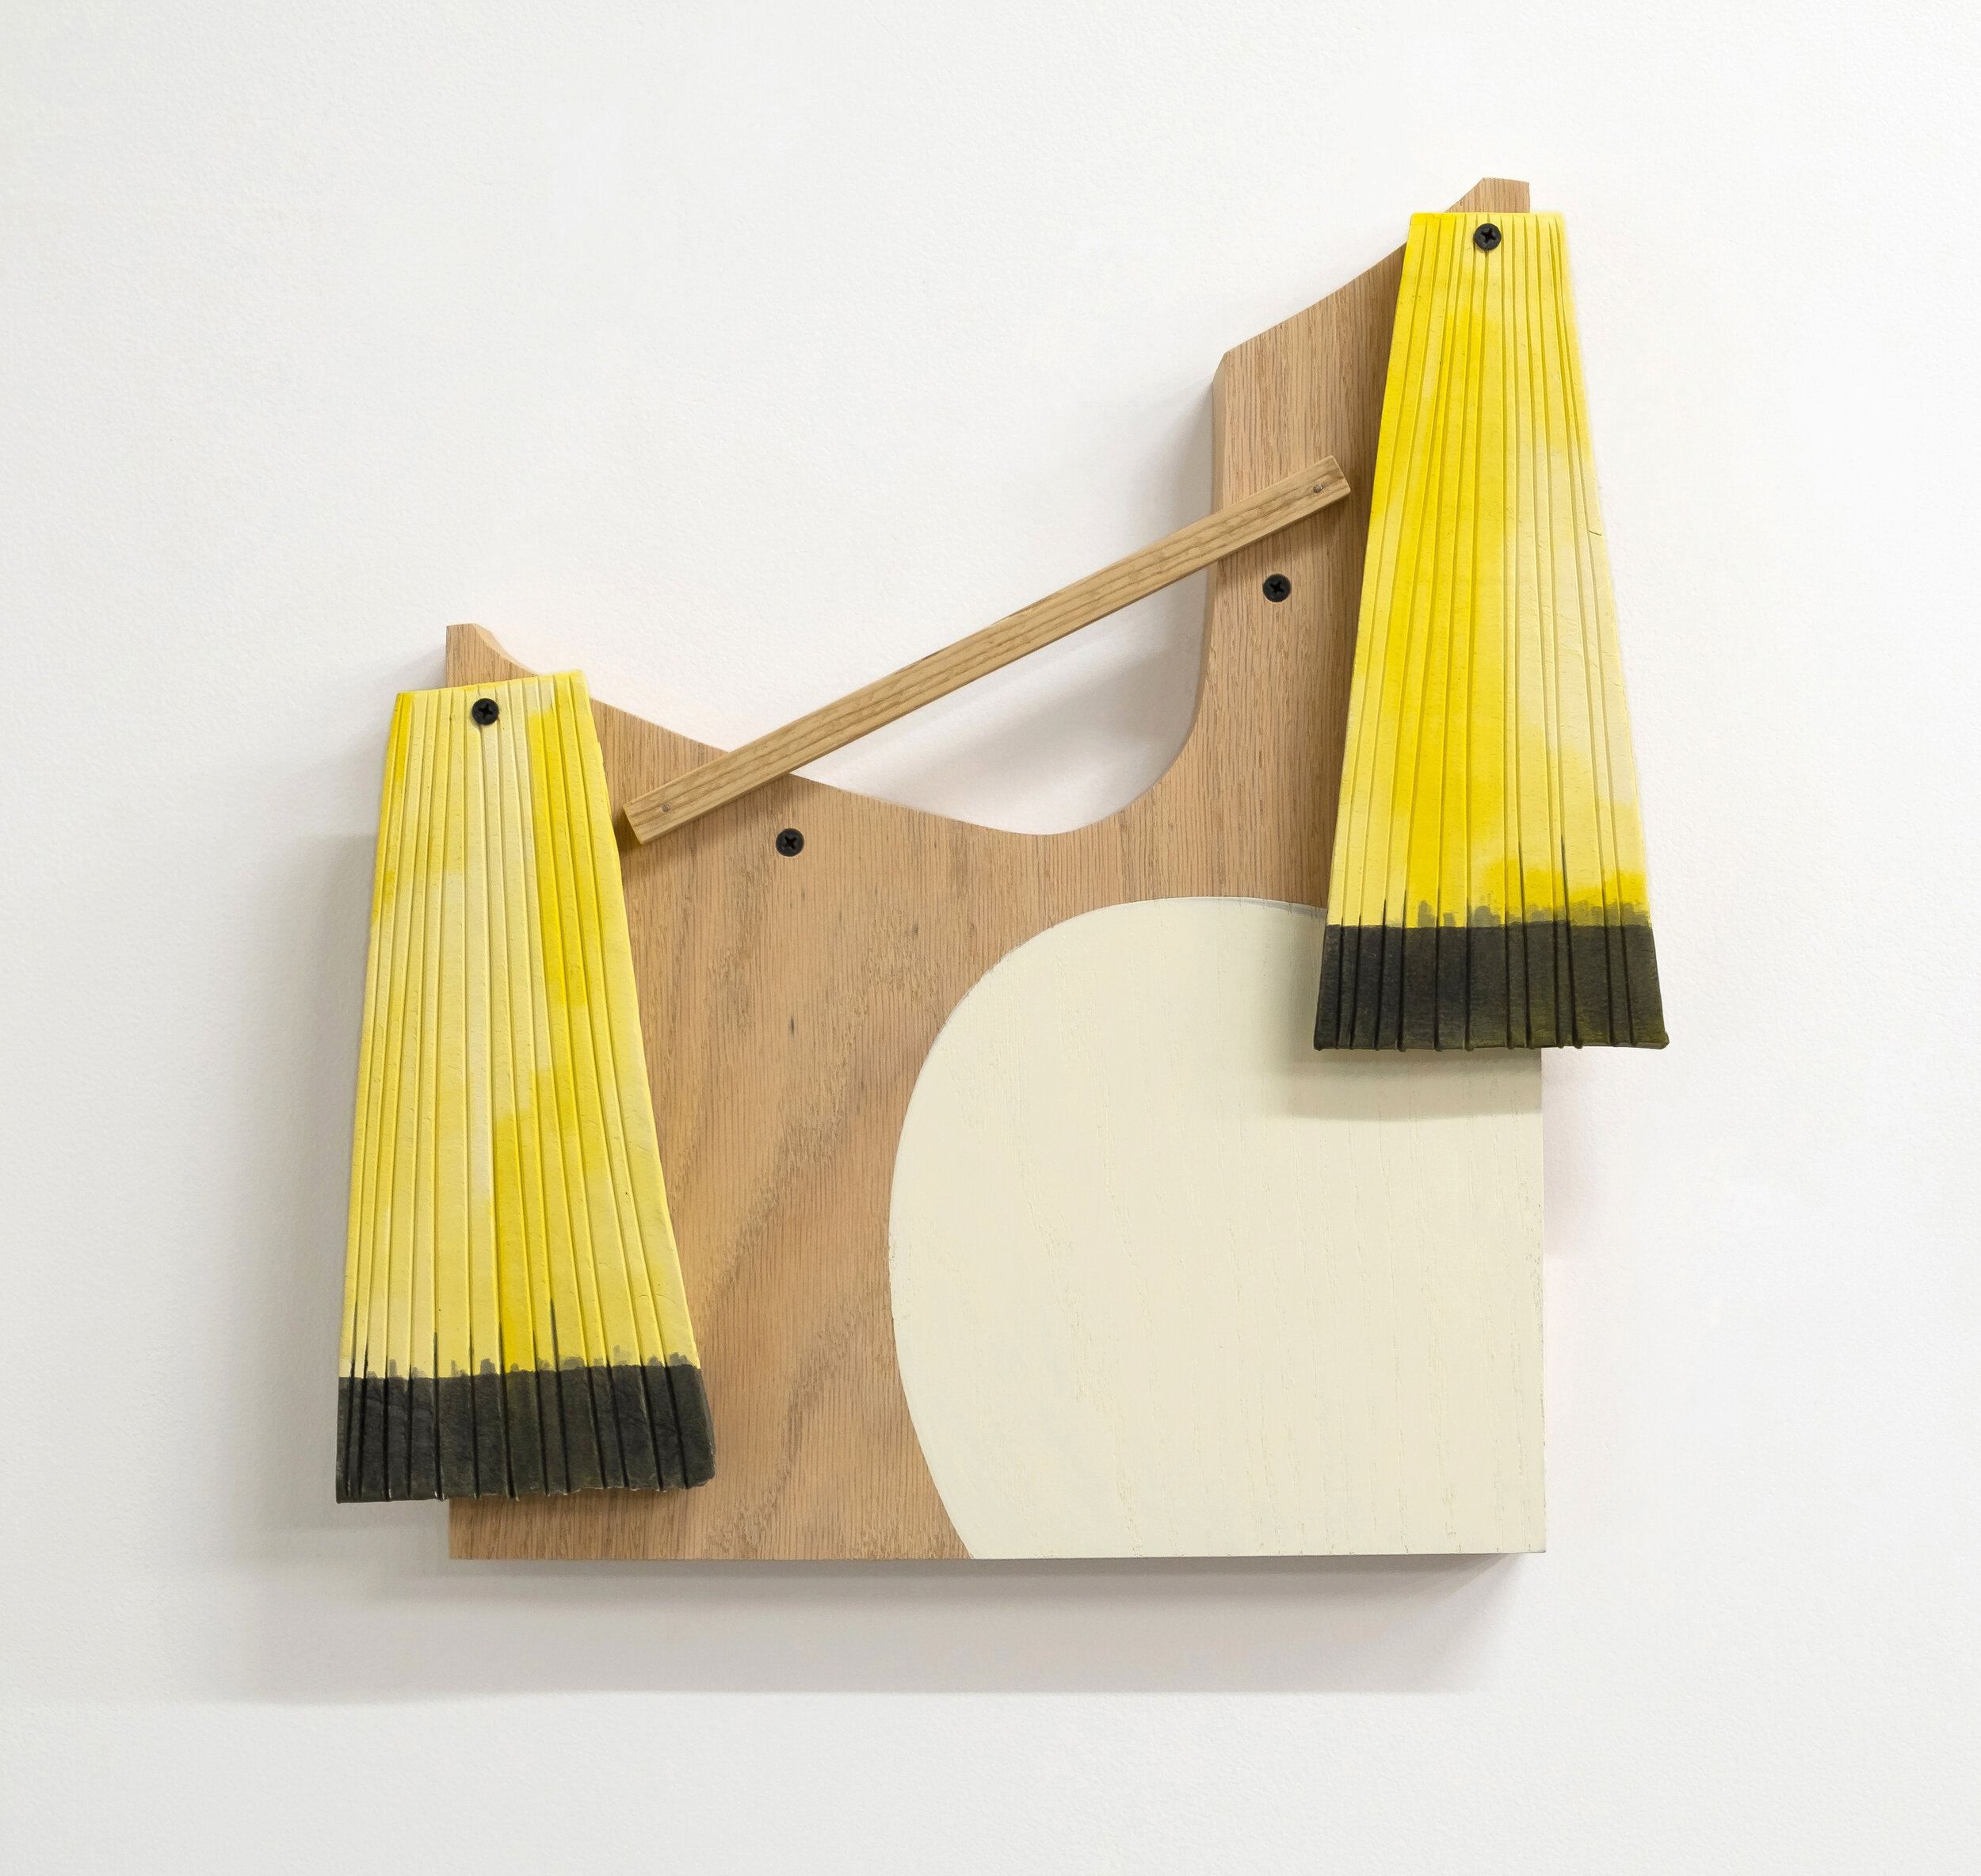  Christina Tenaglia, untitled, 2018, wood, earthenware, paint, ink, nails, screws, 16-3/4” x 1-1/2" x 12” 